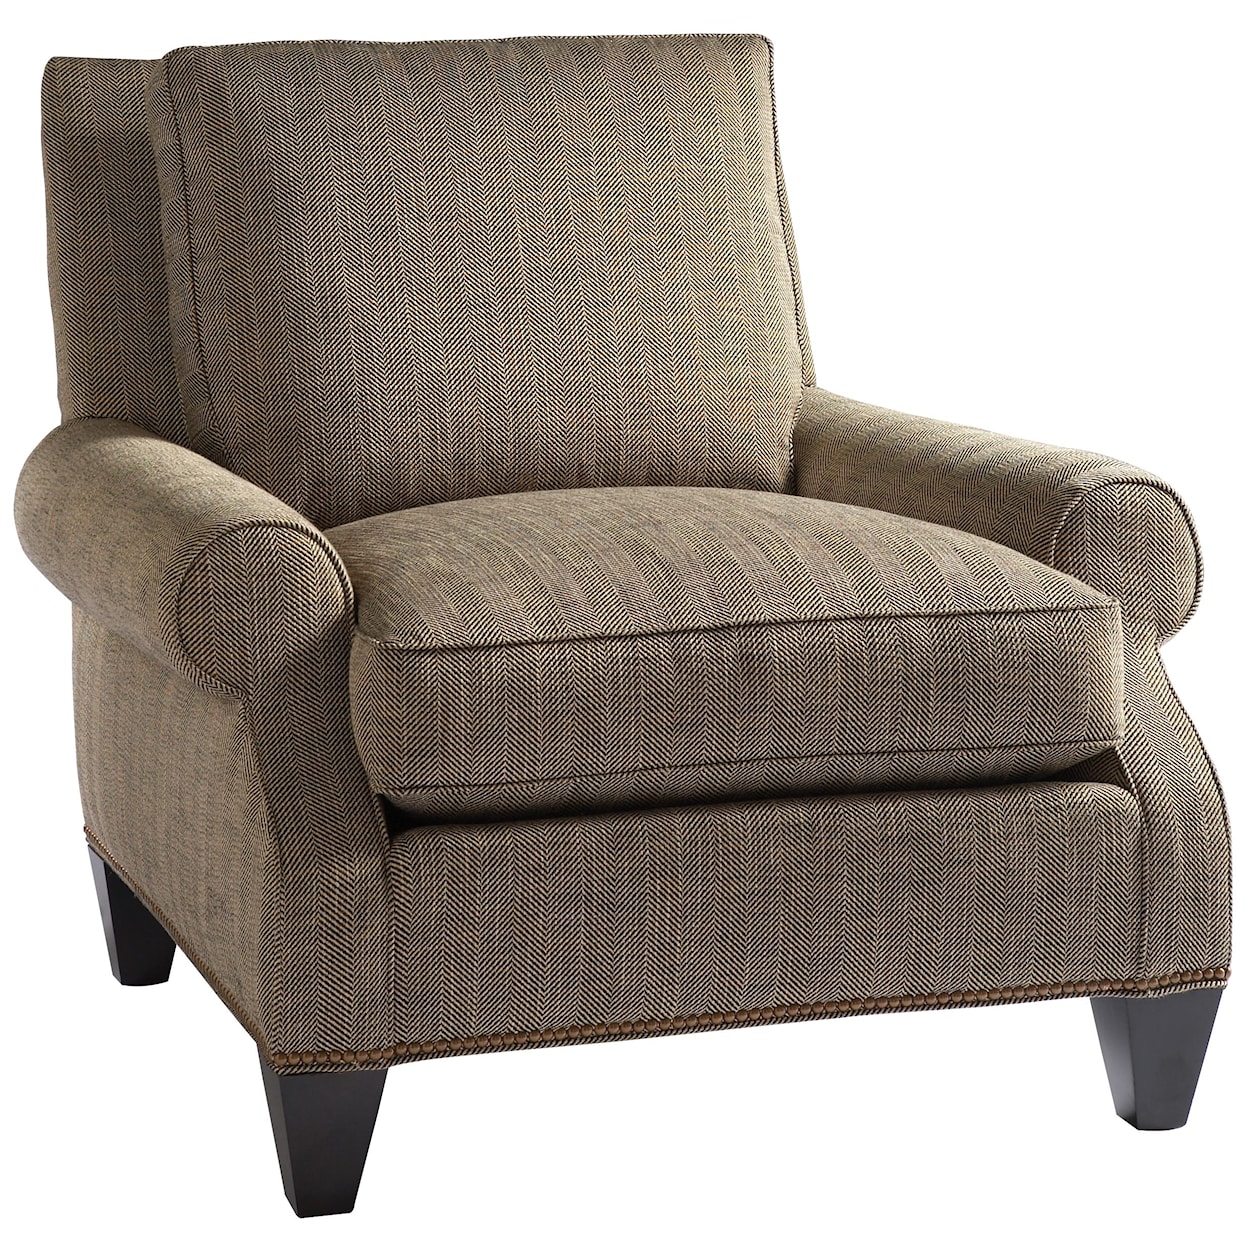 Lillian August Custom Upholstery Leighton Chair